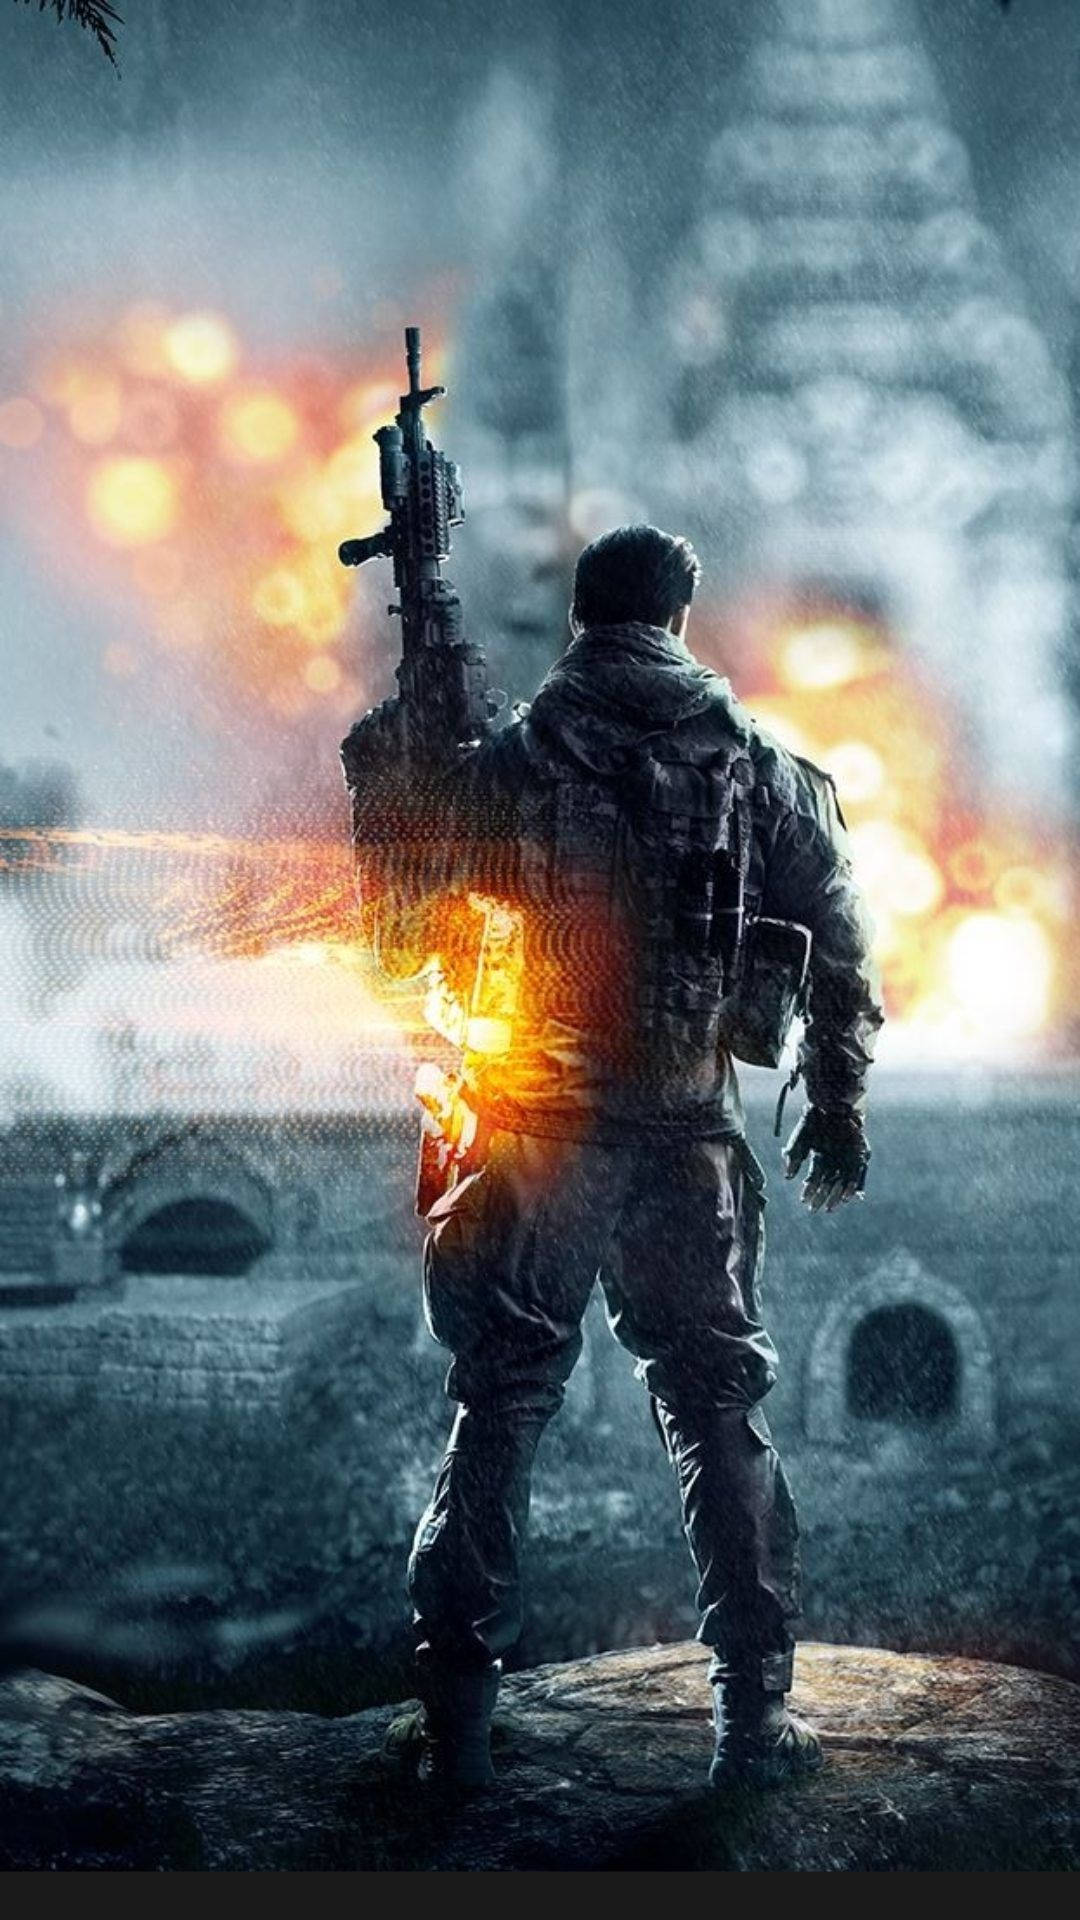 Iphonegaming Battlefield 4 Soldat. Wallpaper